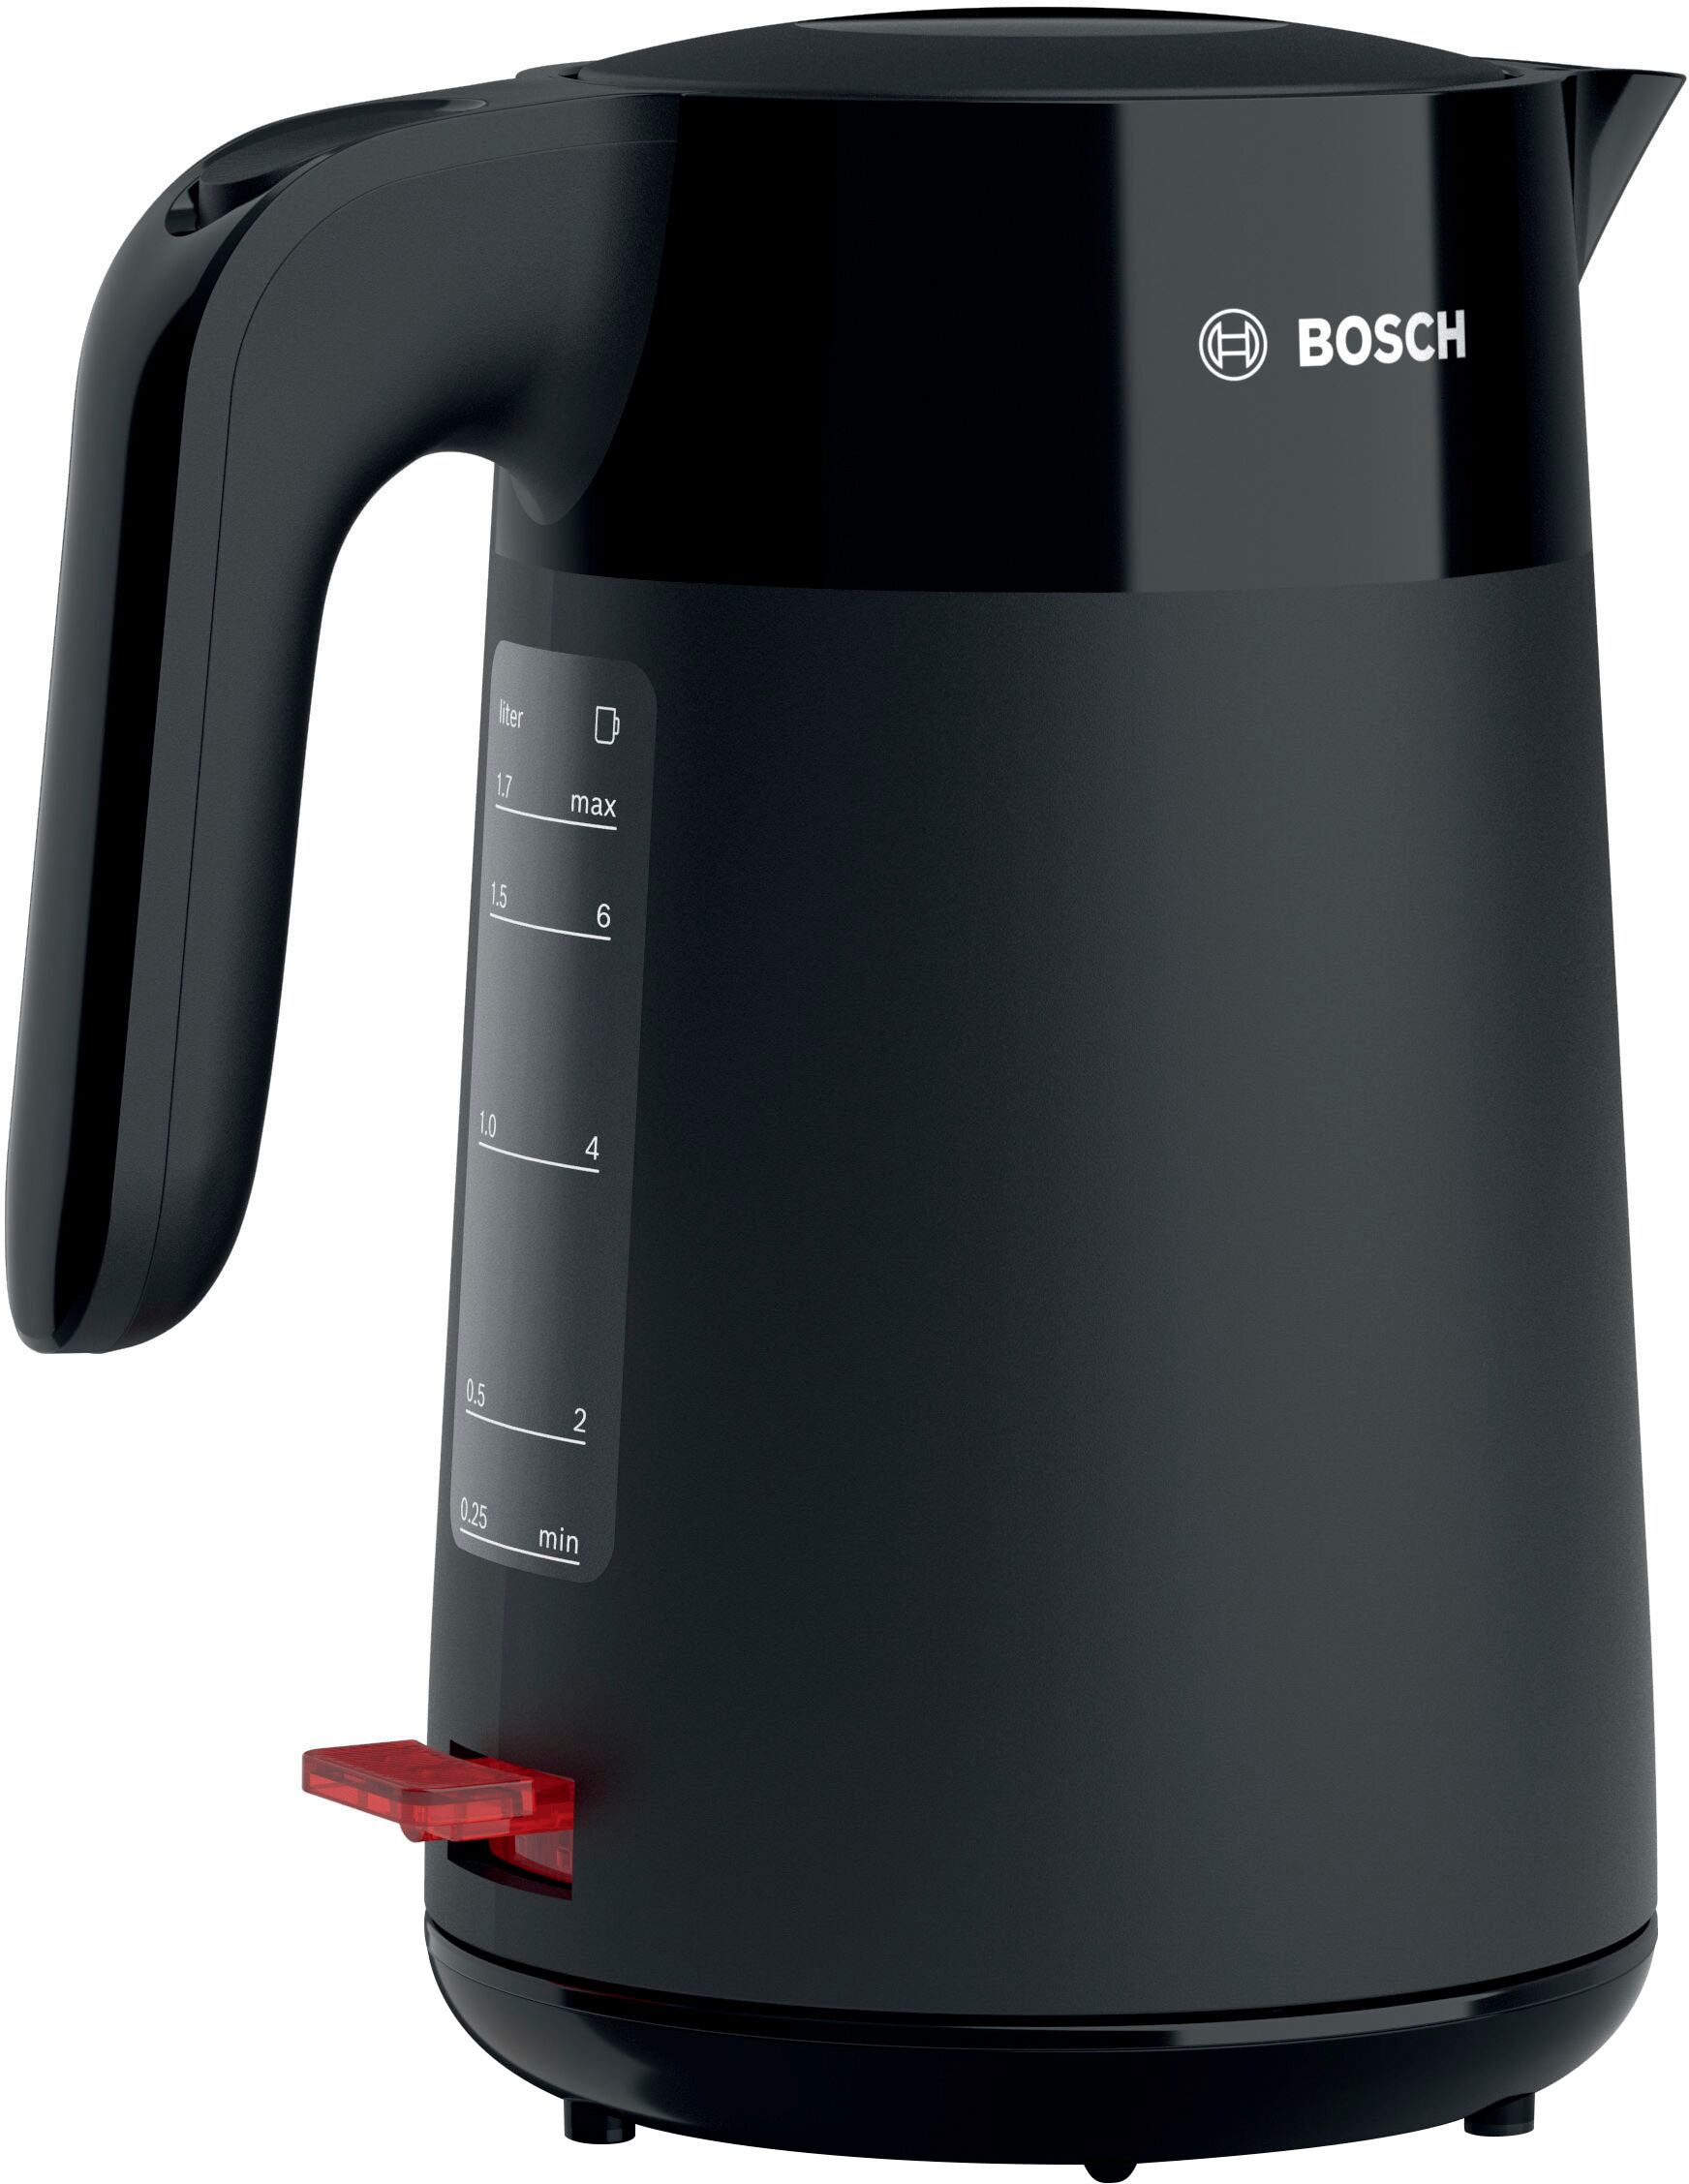 Bosch ❤ Wasserkocher jetzt